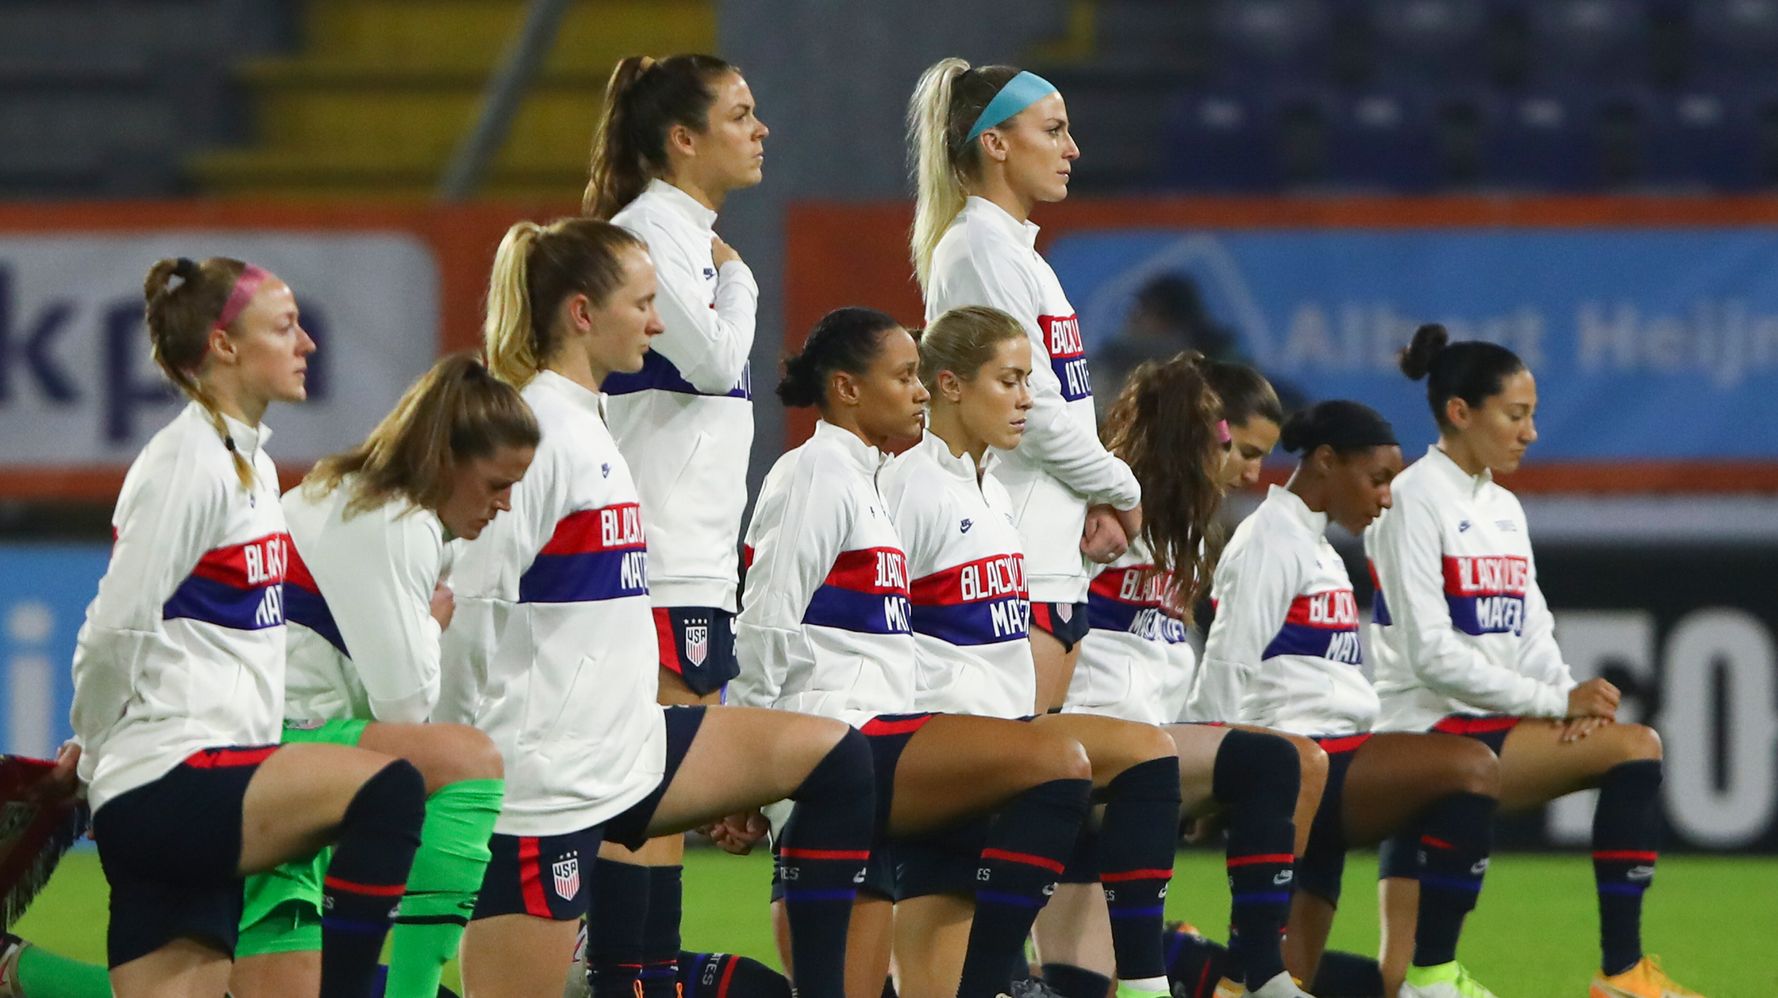 U.S. Women’s Soccer Team Sports Black Lives Matter Jackets To ‘Affirm Human Decency’